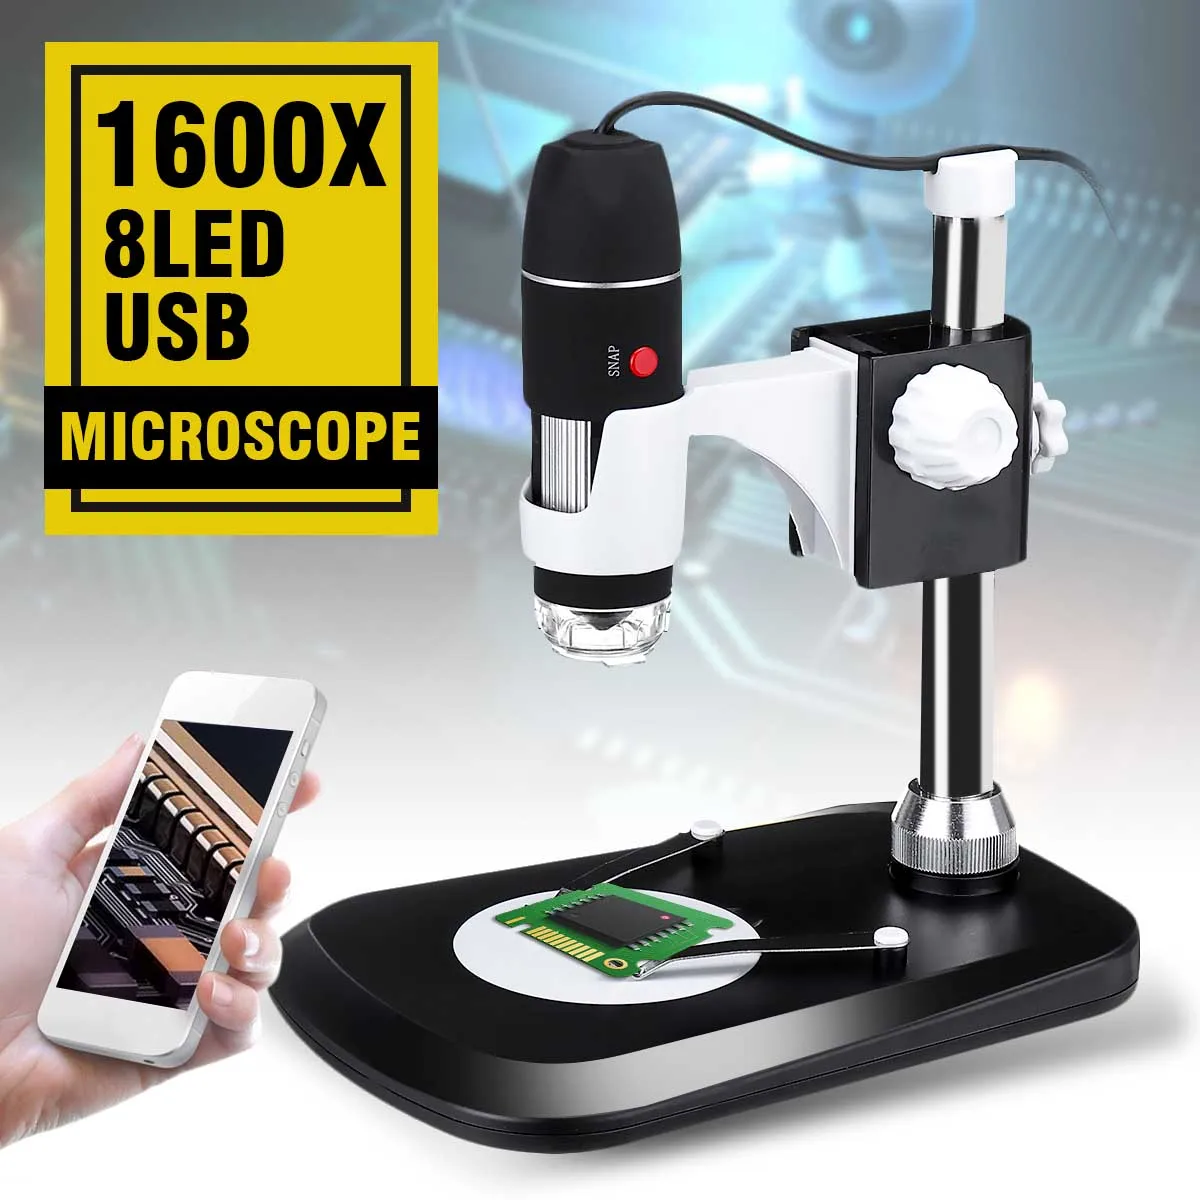 1600x 8LED USB Digital Microscope Handheld Electronic Microscope Microscope 1600X Endoscope Magnifier Measuring Ruler Camera Magnifier 24bit 